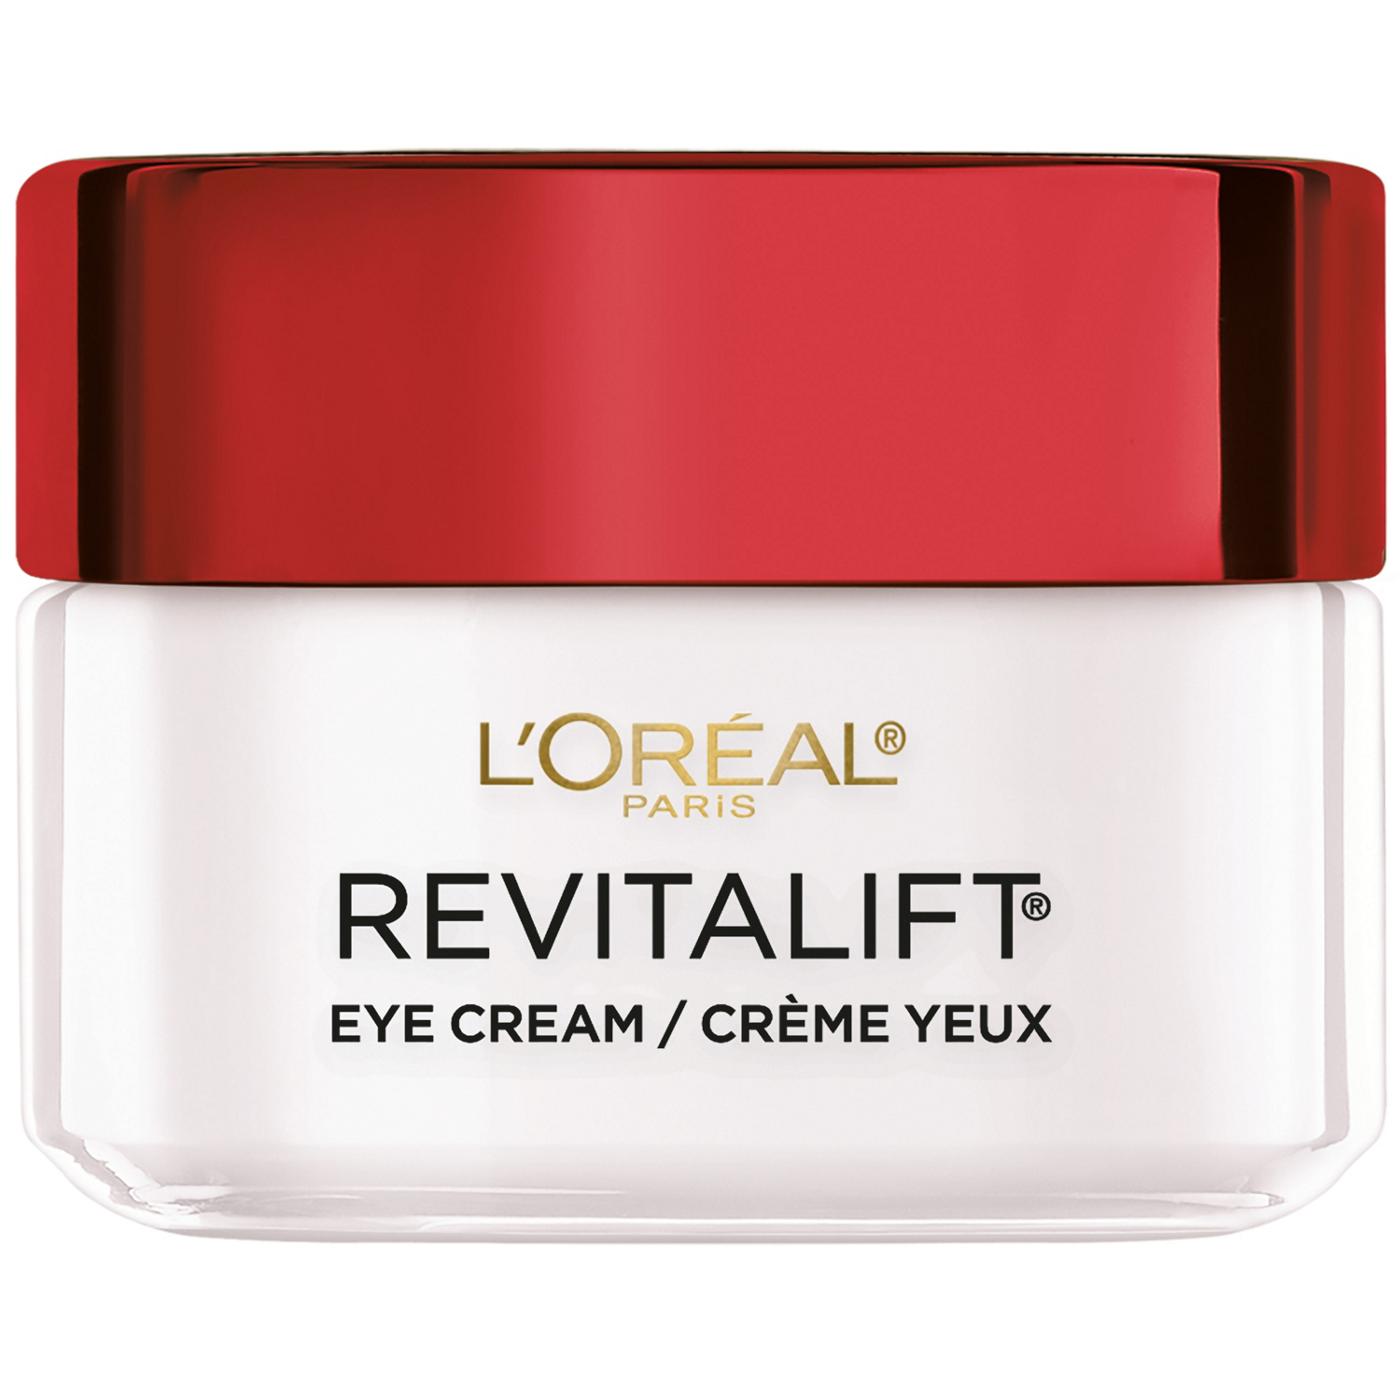 L'Oréal Paris Revitalift Anti-Wrinkle Firming Eye Cream, Fragrance Free; image 6 of 6